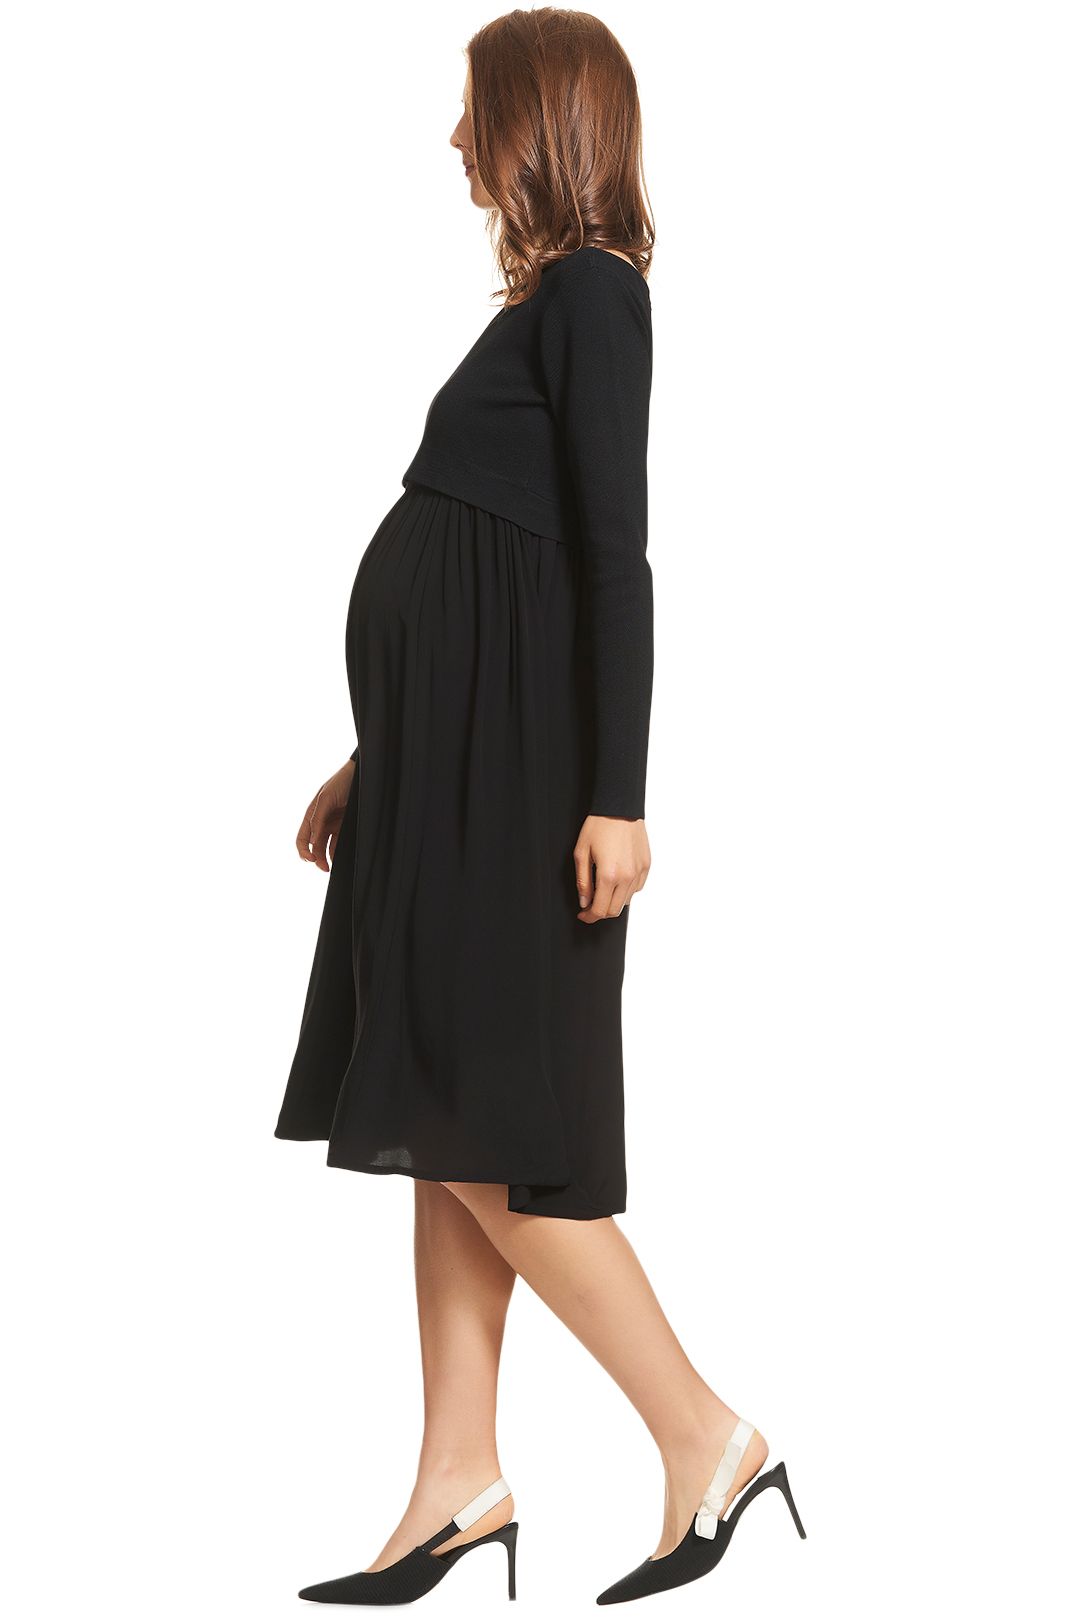 Soon-Maternity-Francis-Long-Sleeve-Dress-Navy-Speck-Side